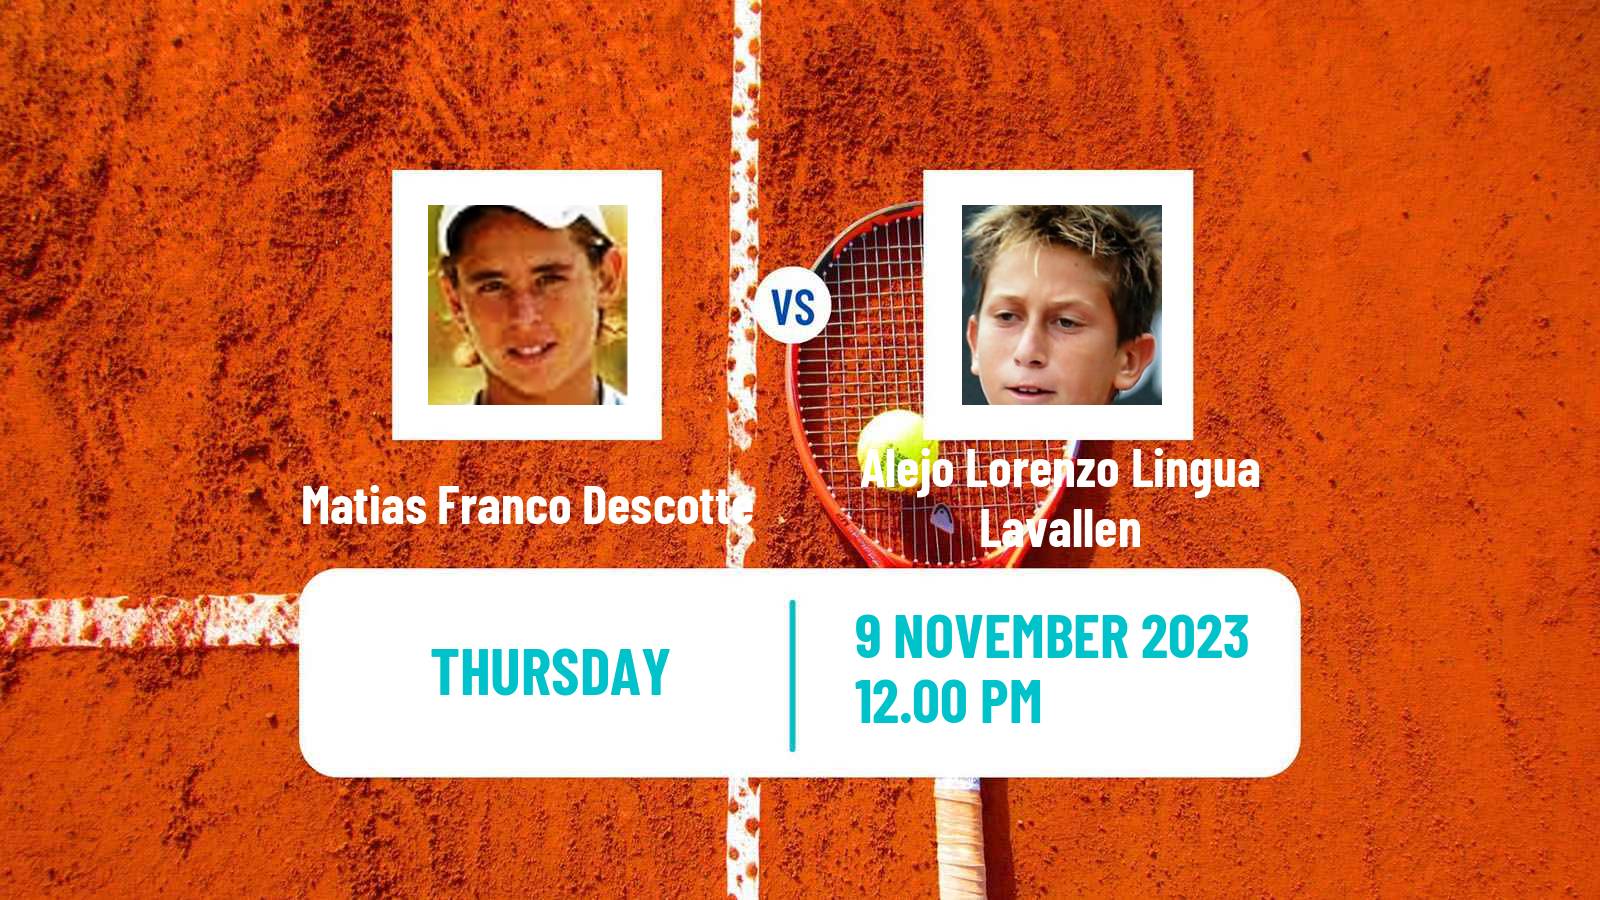 Tennis ITF M15 Rosario Men Matias Franco Descotte - Alejo Lorenzo Lingua Lavallen